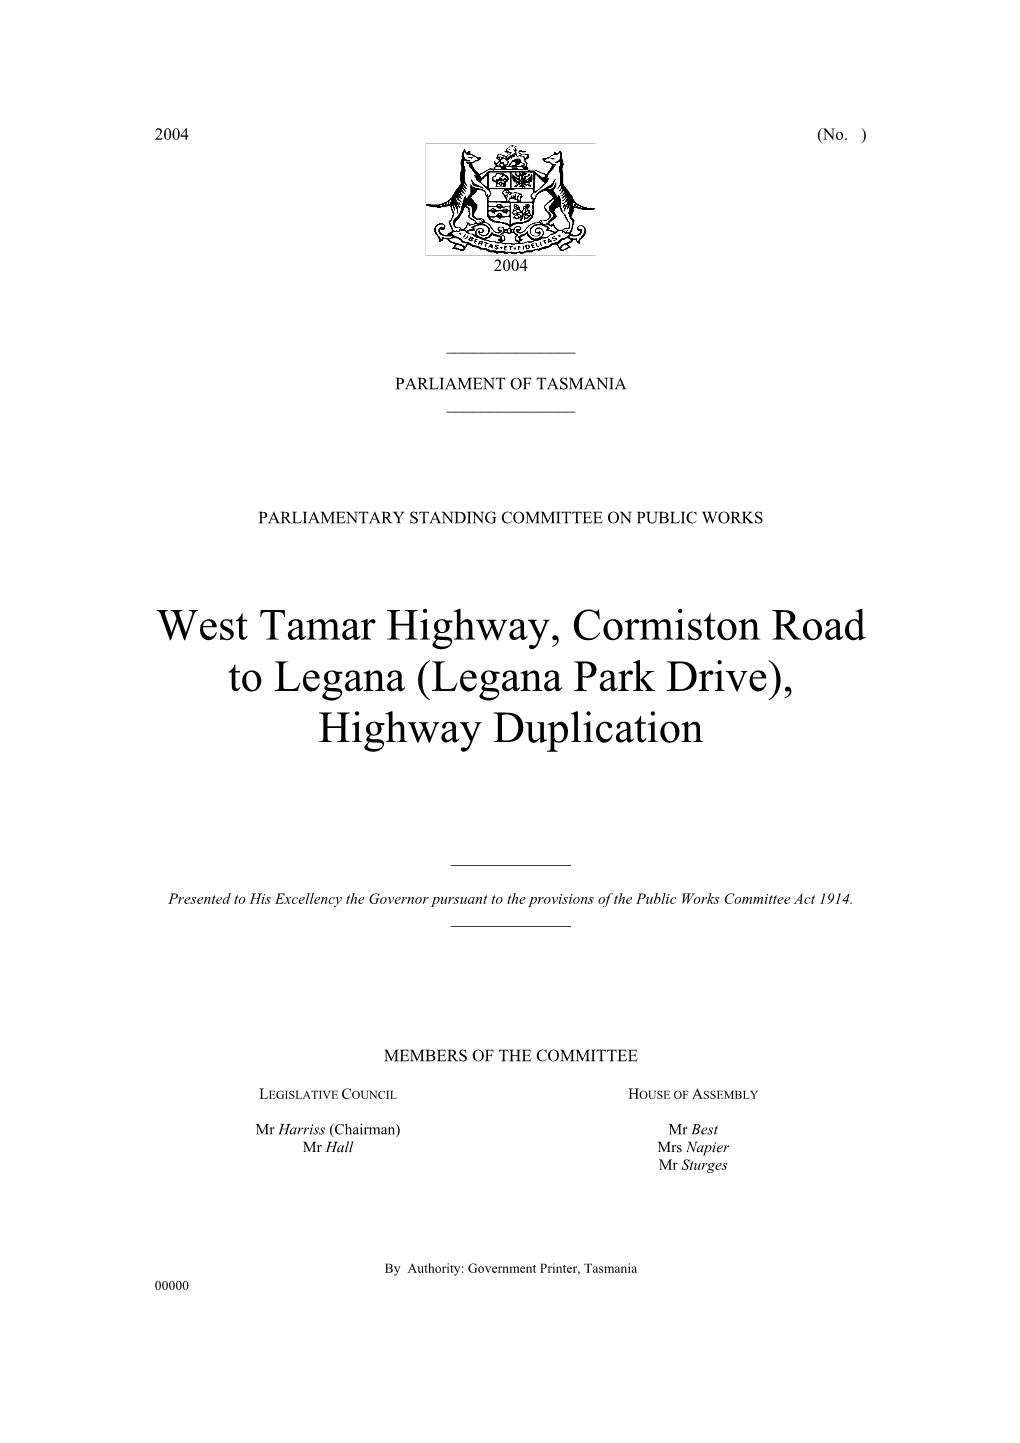 West Tamar Highway, Cormiston Road to Legana (Legana Park Drive), Highway Duplication